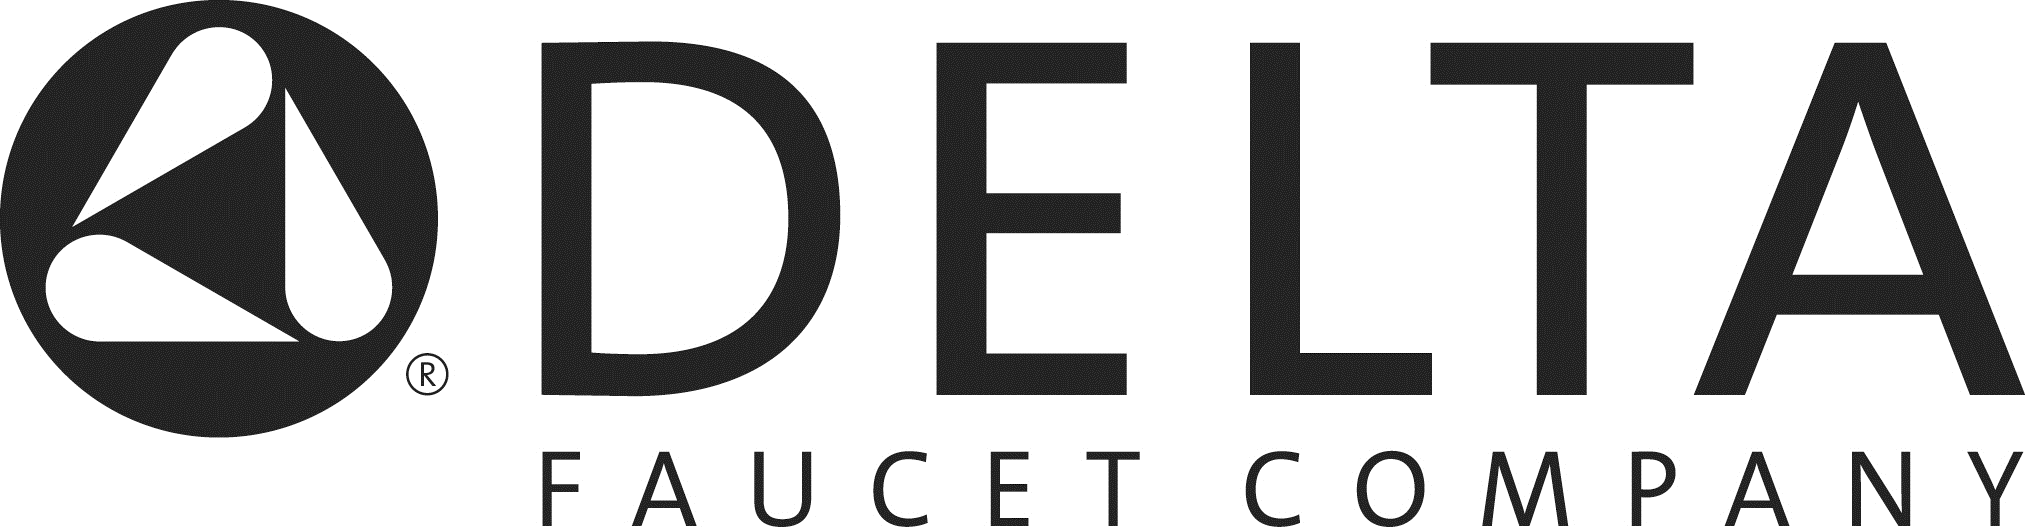 Eurest Logo - deltafaucet Catering